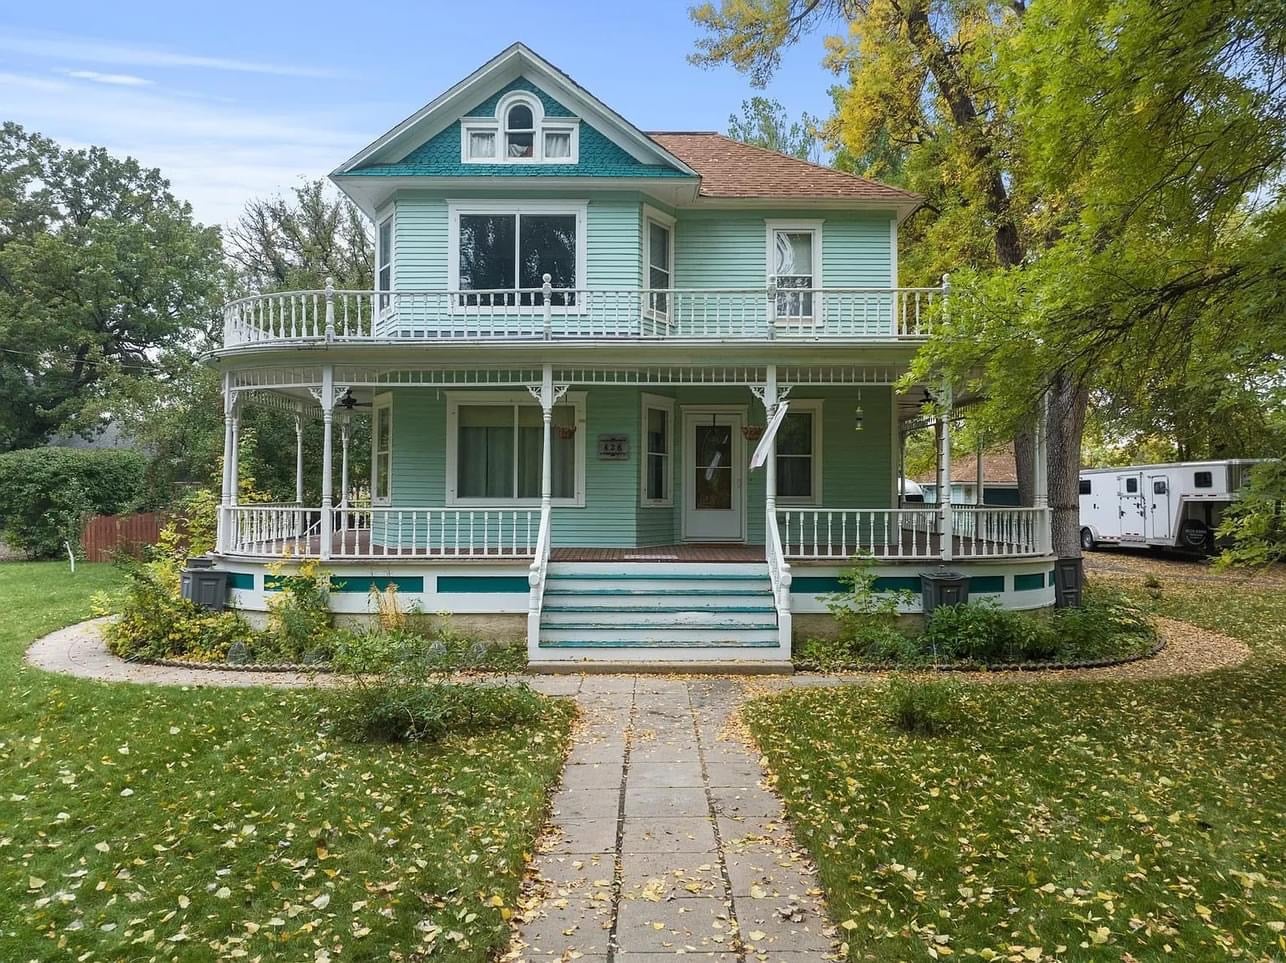 1904 Historic House For Sale In Minot North Dakota